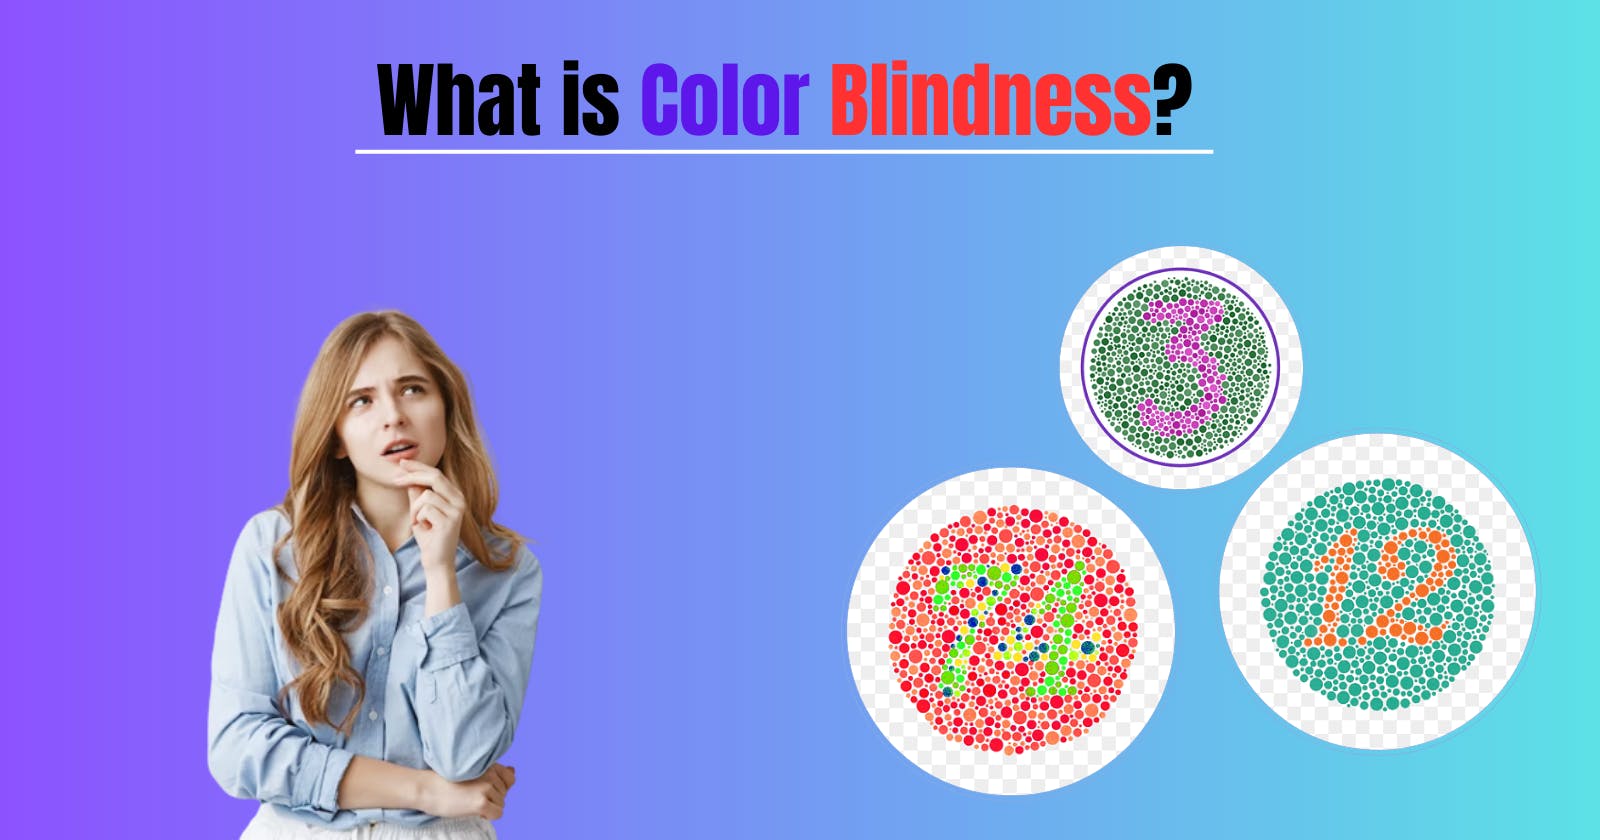 Color Blindness